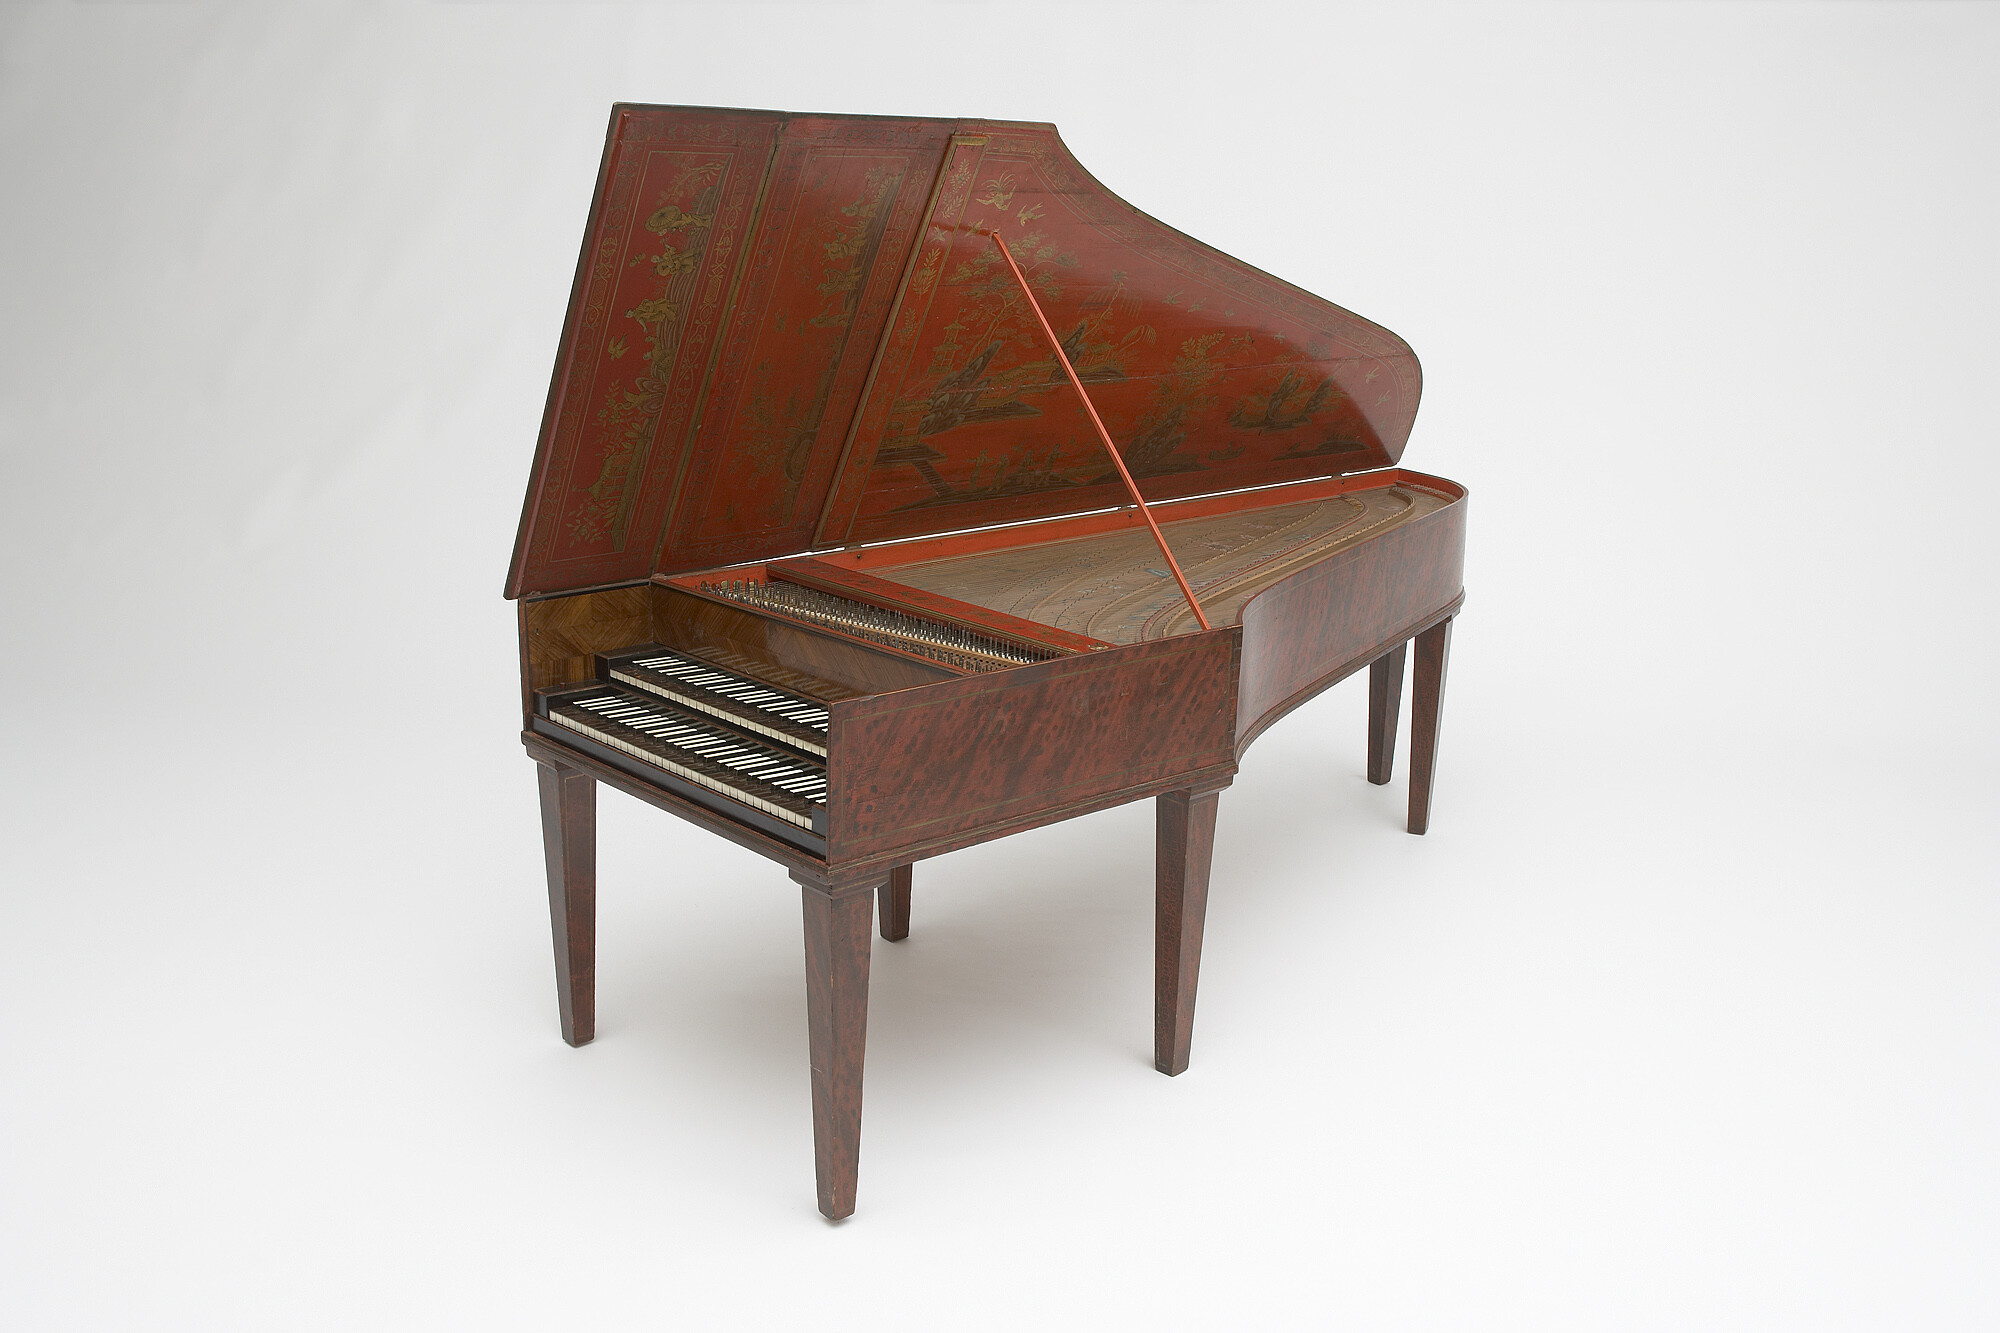 Harpsichord, By Johann Adolph Hass, ca. 1760, Chordophone, Photo credit: Alex Contreras